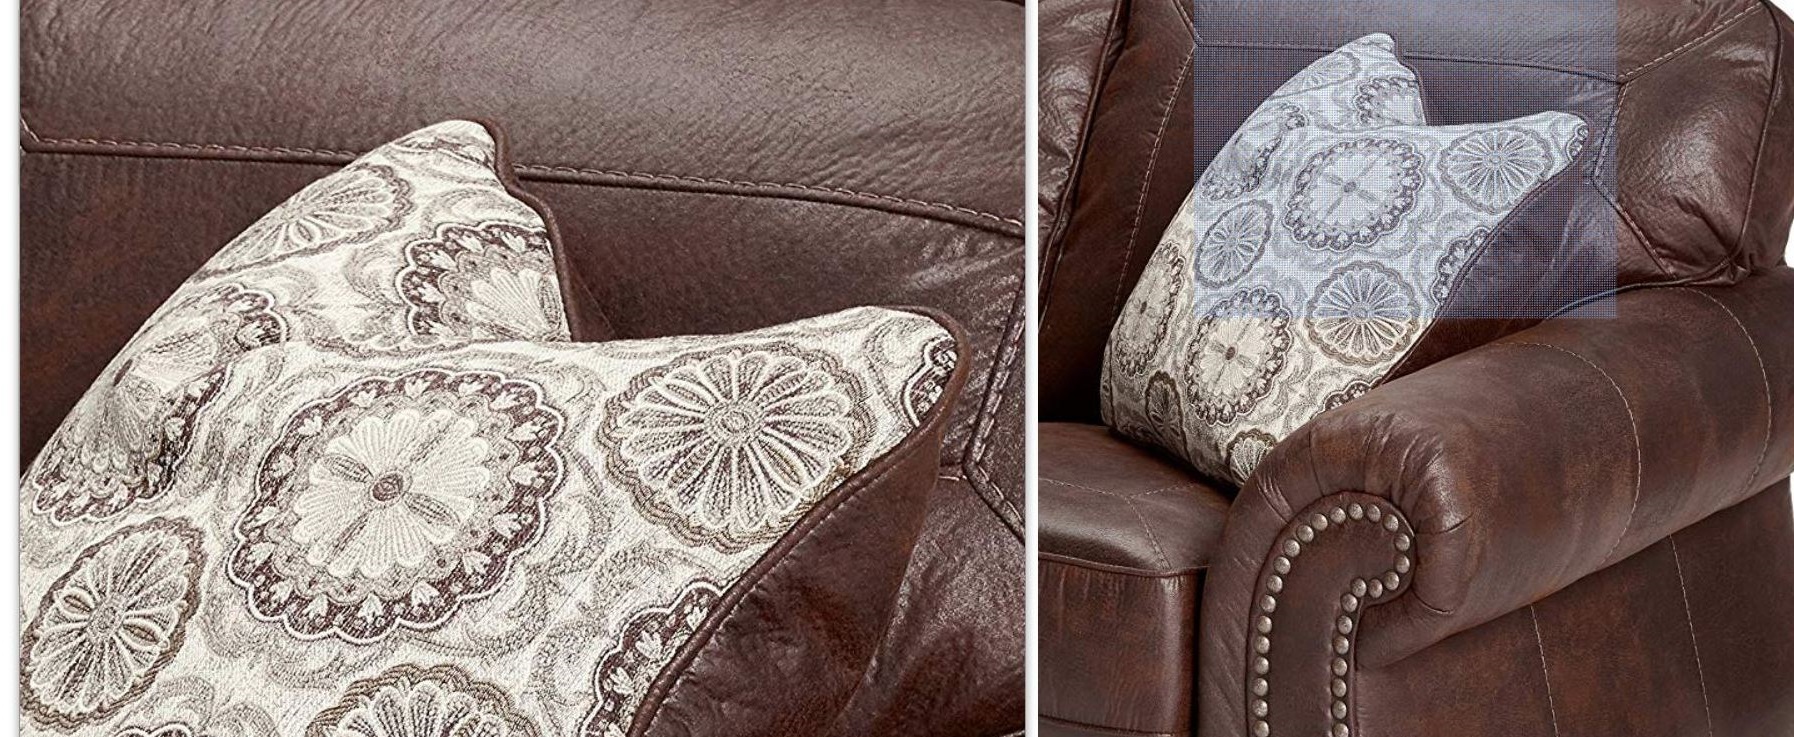 Stafford Leather Living Room Sofa